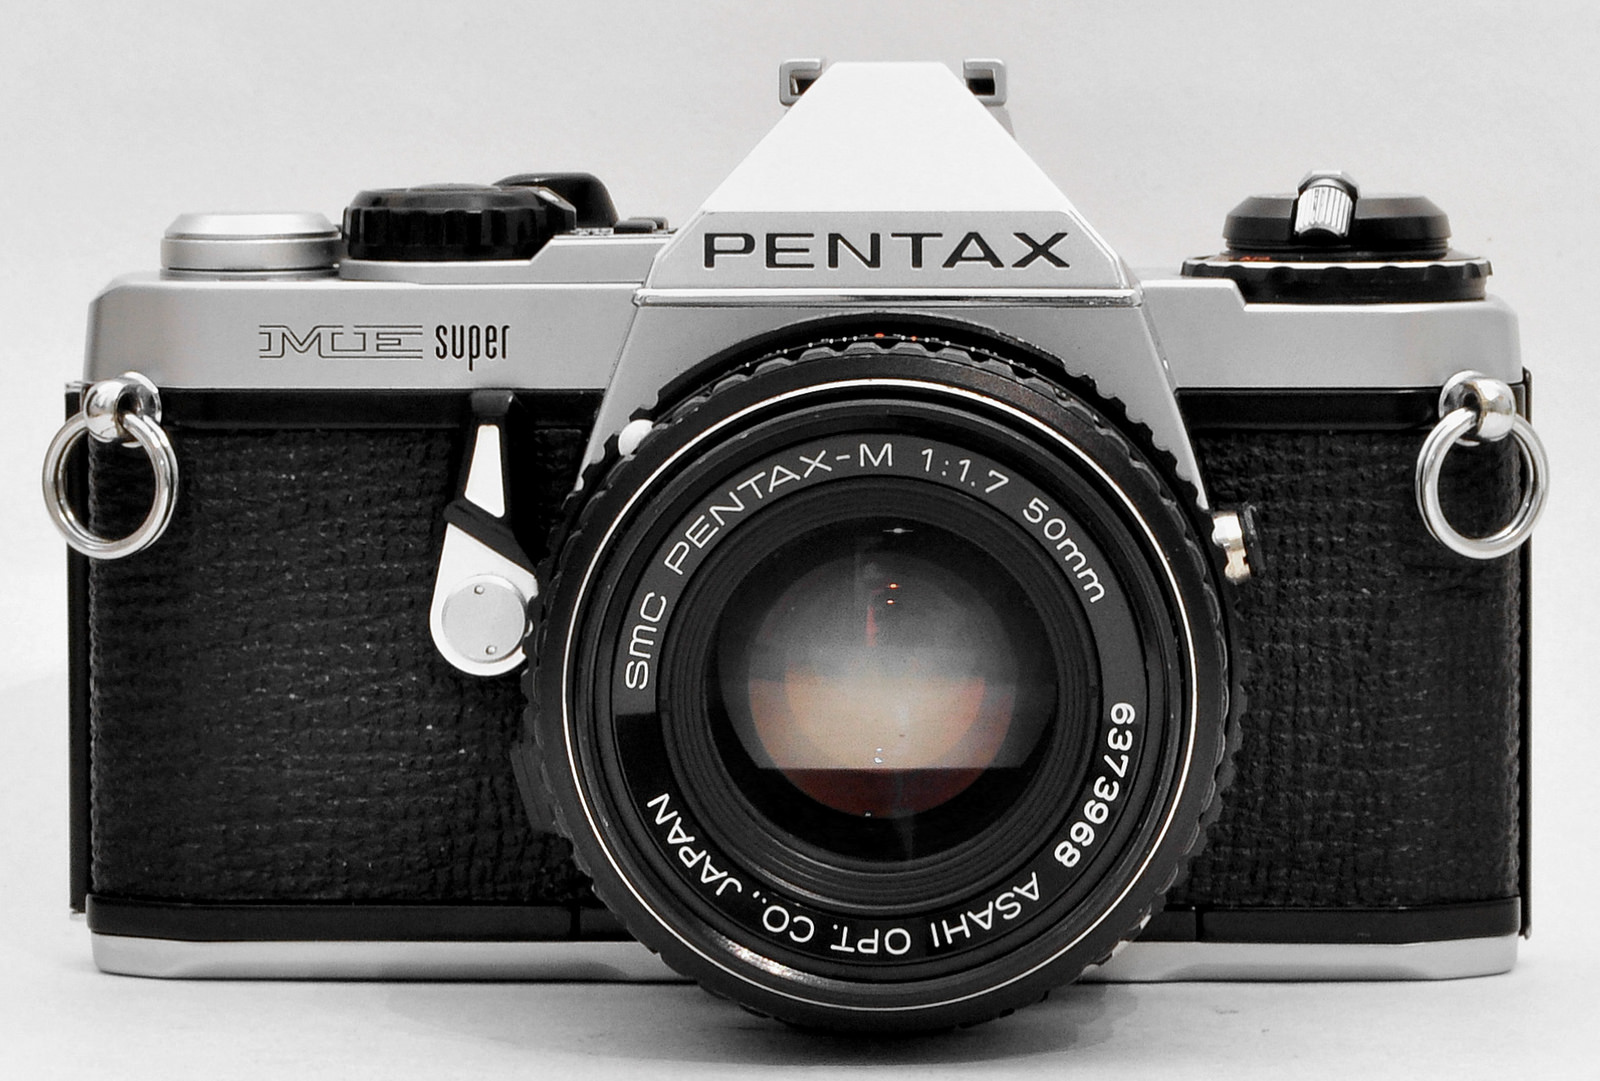 Pentax ME Super 35mm Film SLR Camera with SMC Pentax 50mm f/2.8 Lens